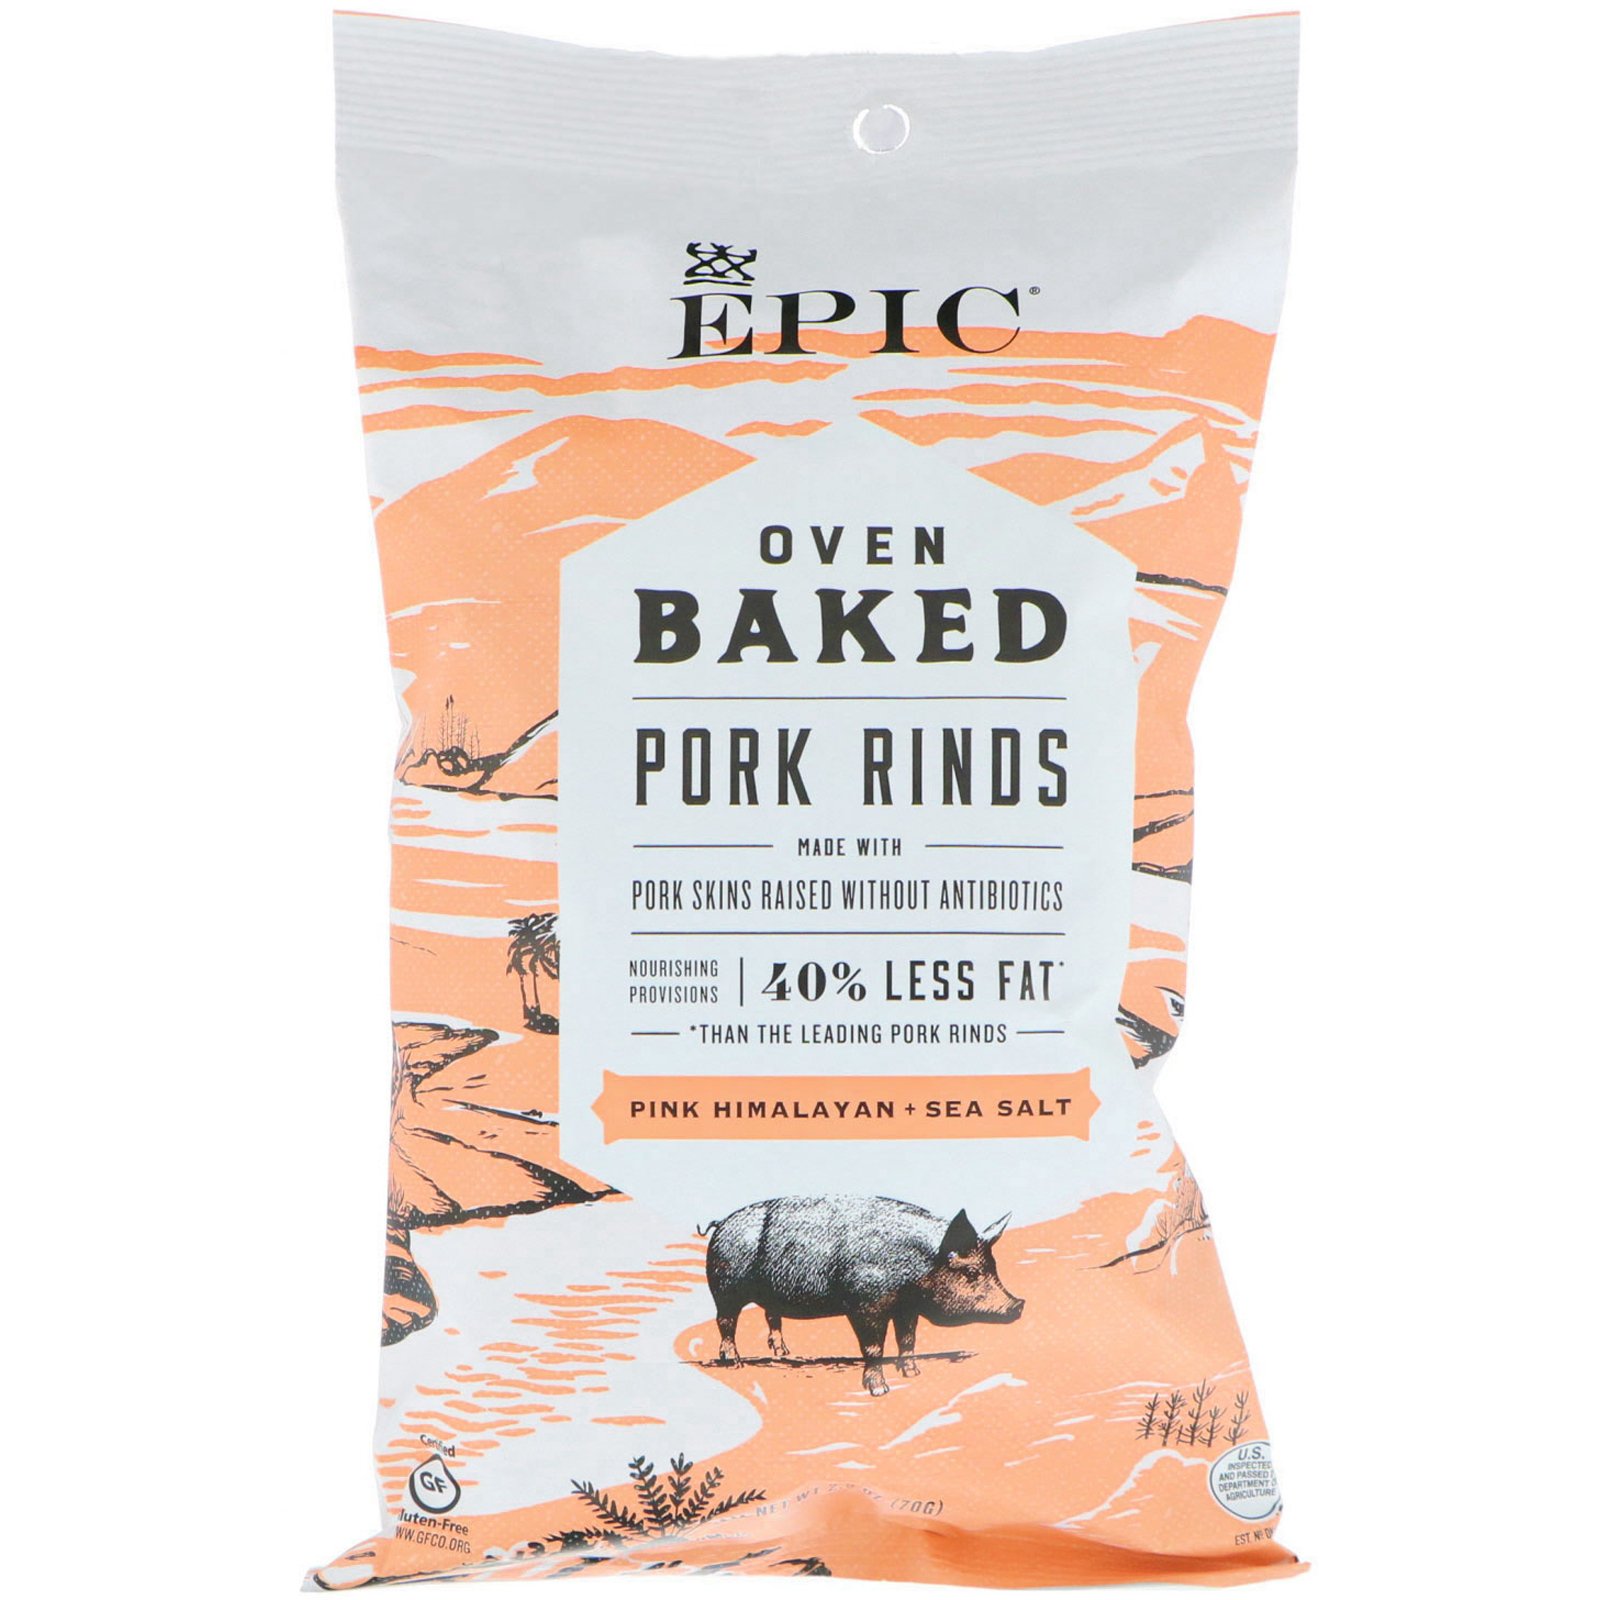 Epic Bar Oven Baked Pork Rinds Pink Himalayan Sea Salt 2 5 Oz 70 G Iherb